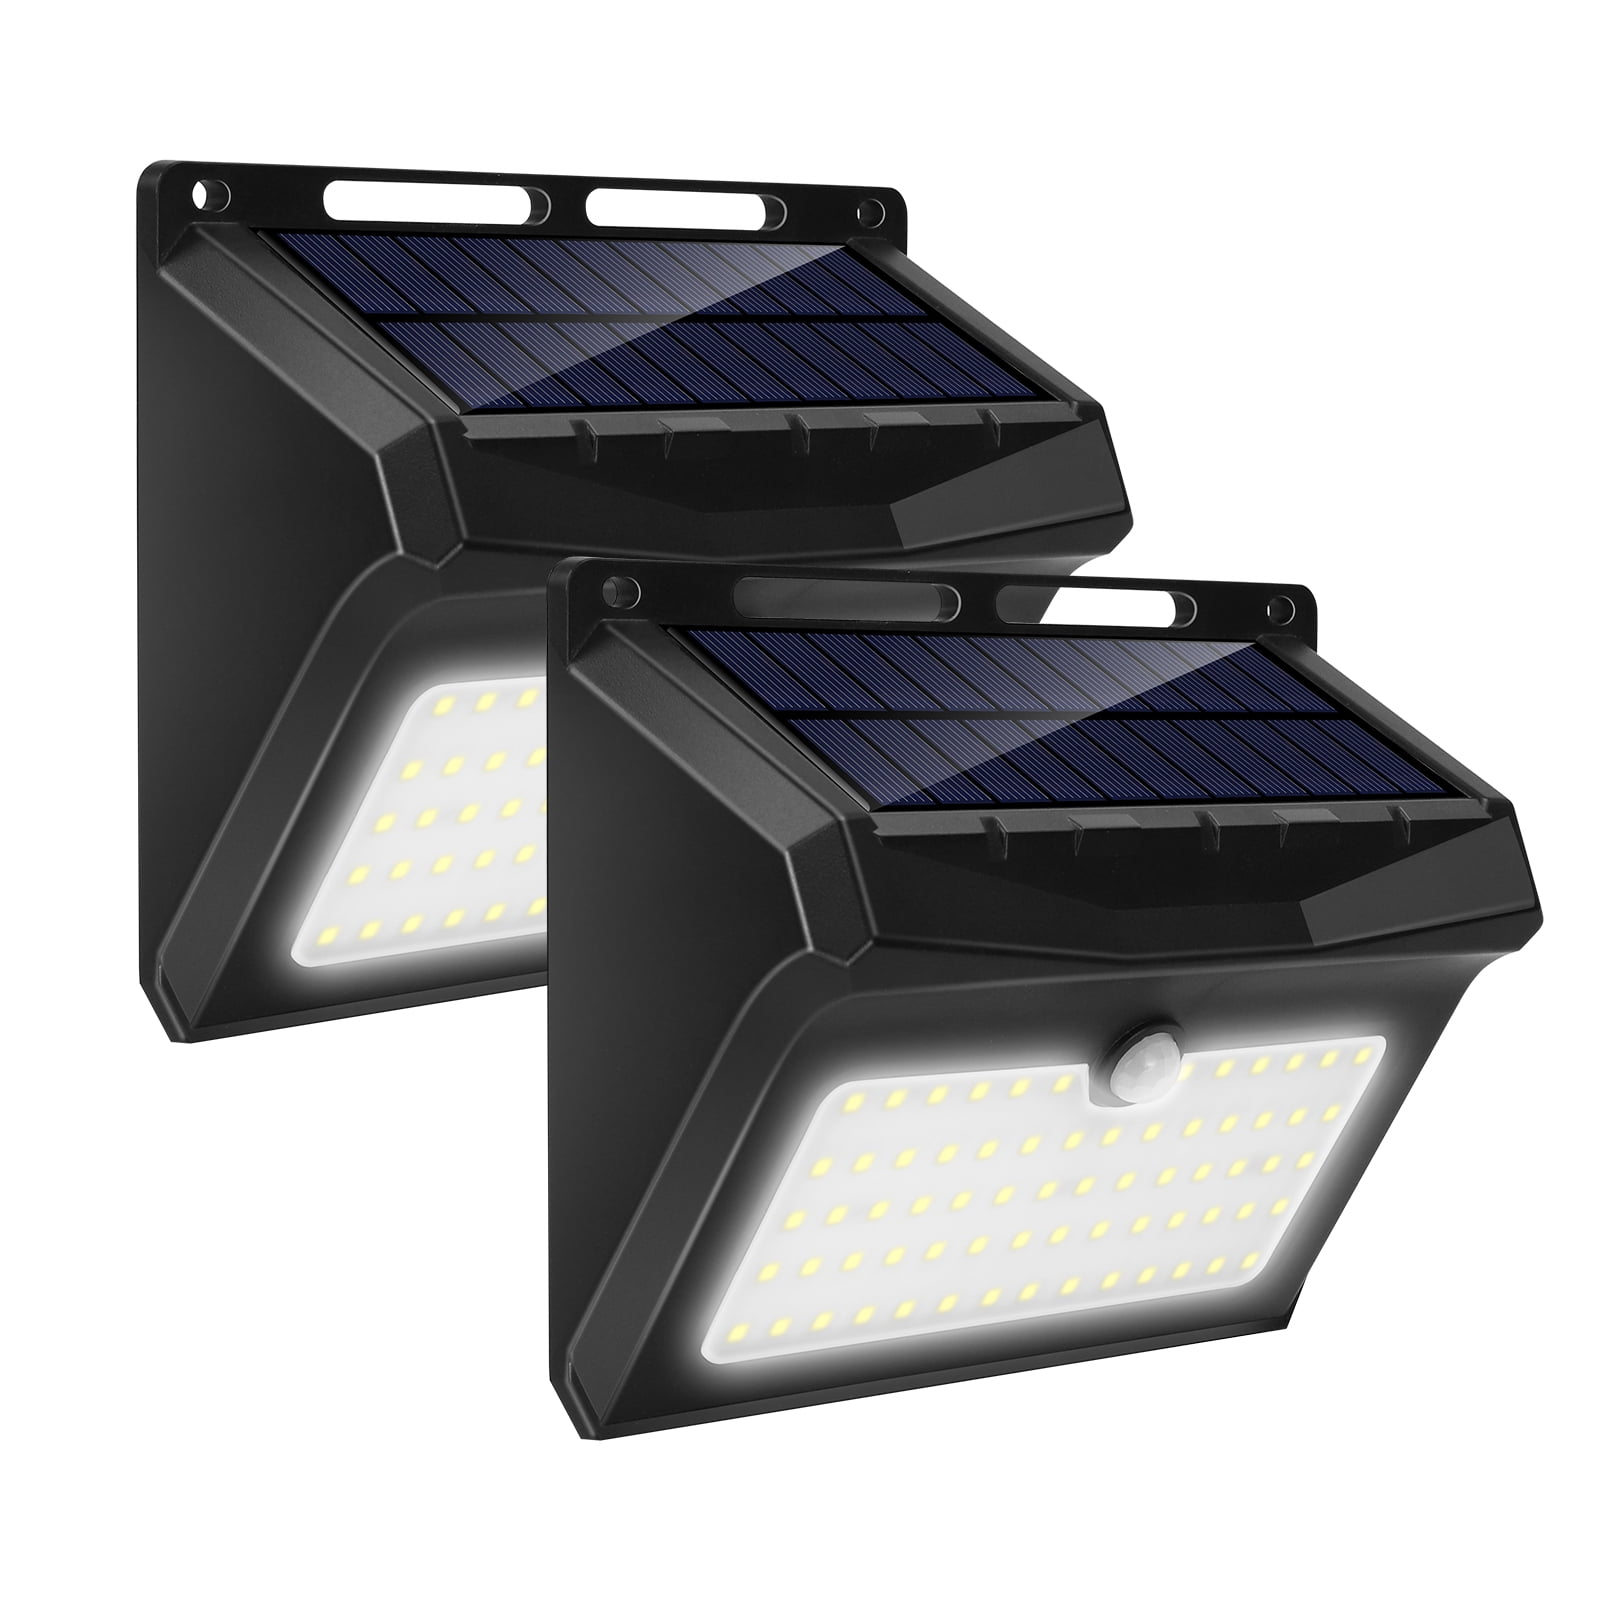 4 Sunjoy Solar Powered Sensor Dusk to Dawn Outdoor Security LED Stair/Wall Light 